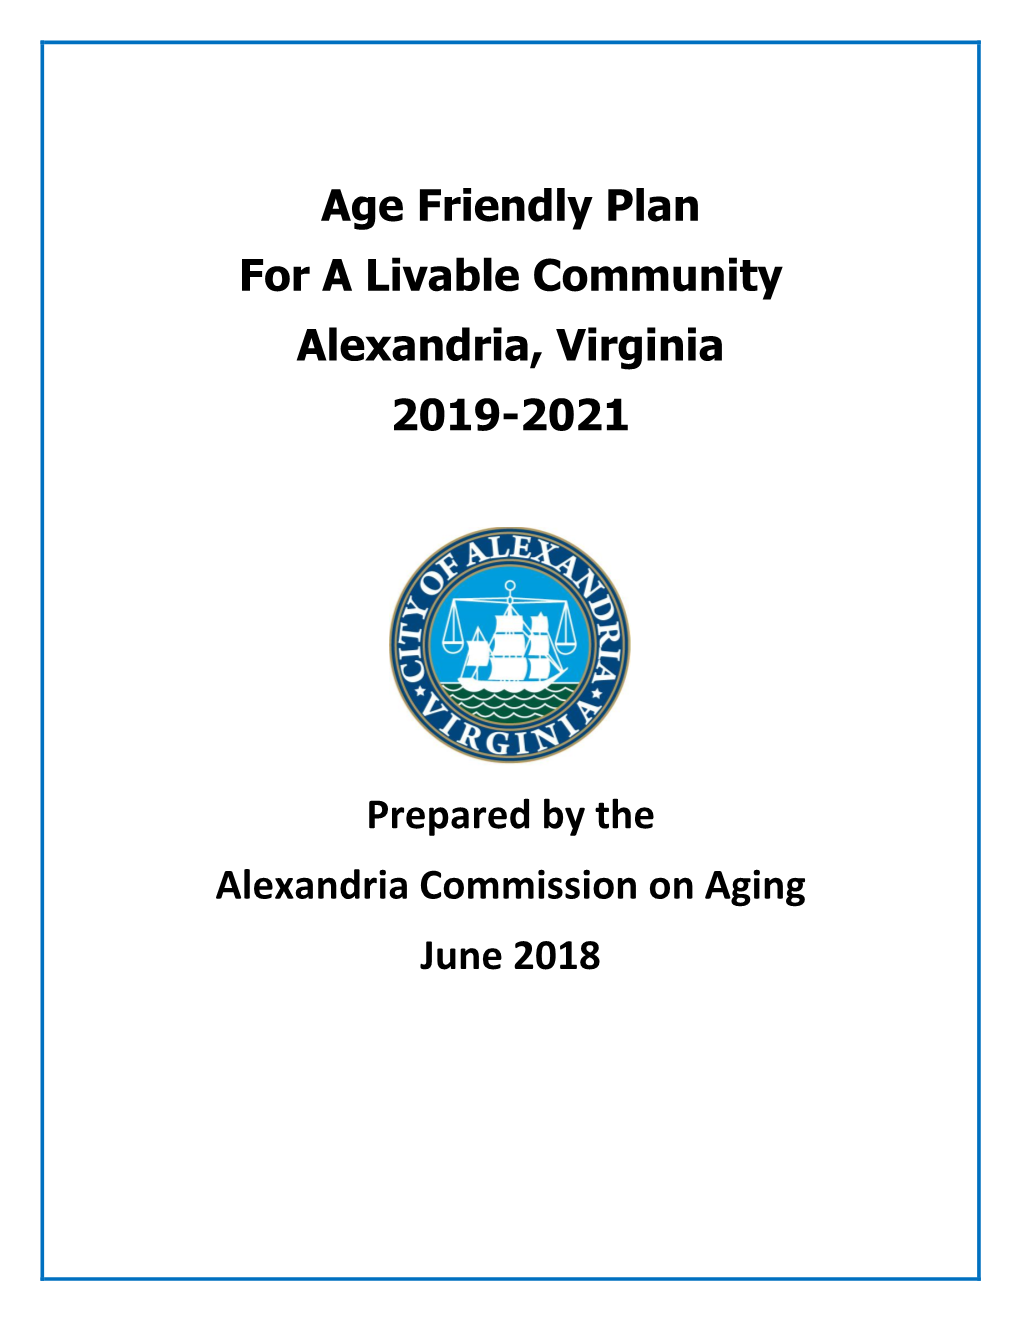 See Alexandria's Age Friendly Community Plan